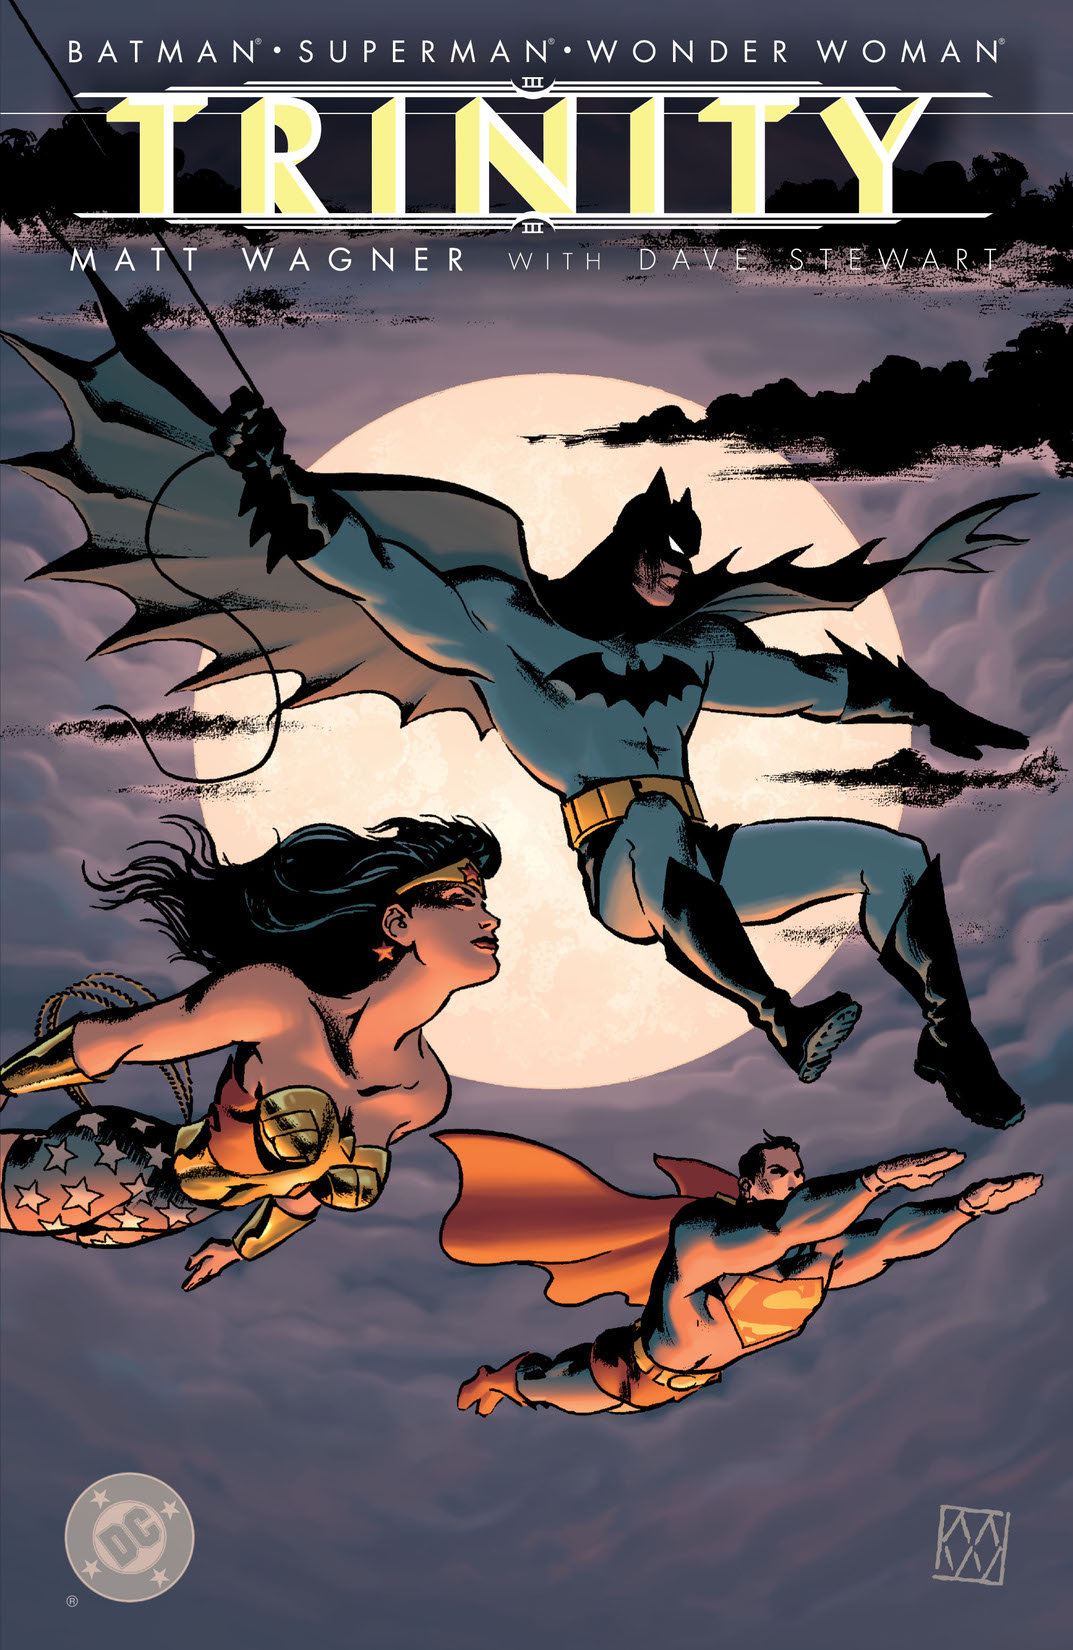 Batman Superman Wonder Woman: Trinity #2 preview images